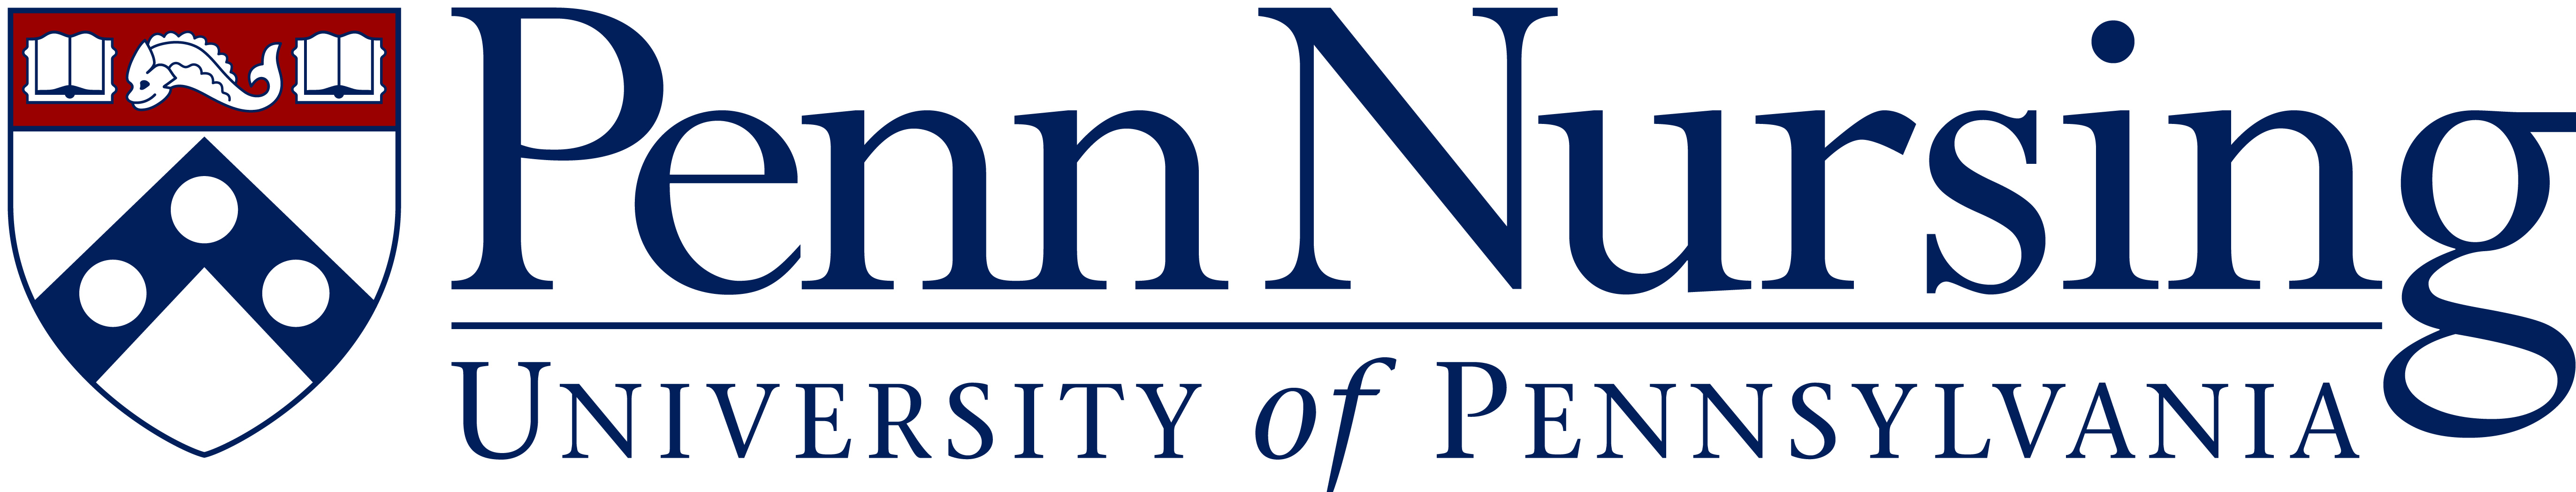 Penn_Nursing_logo